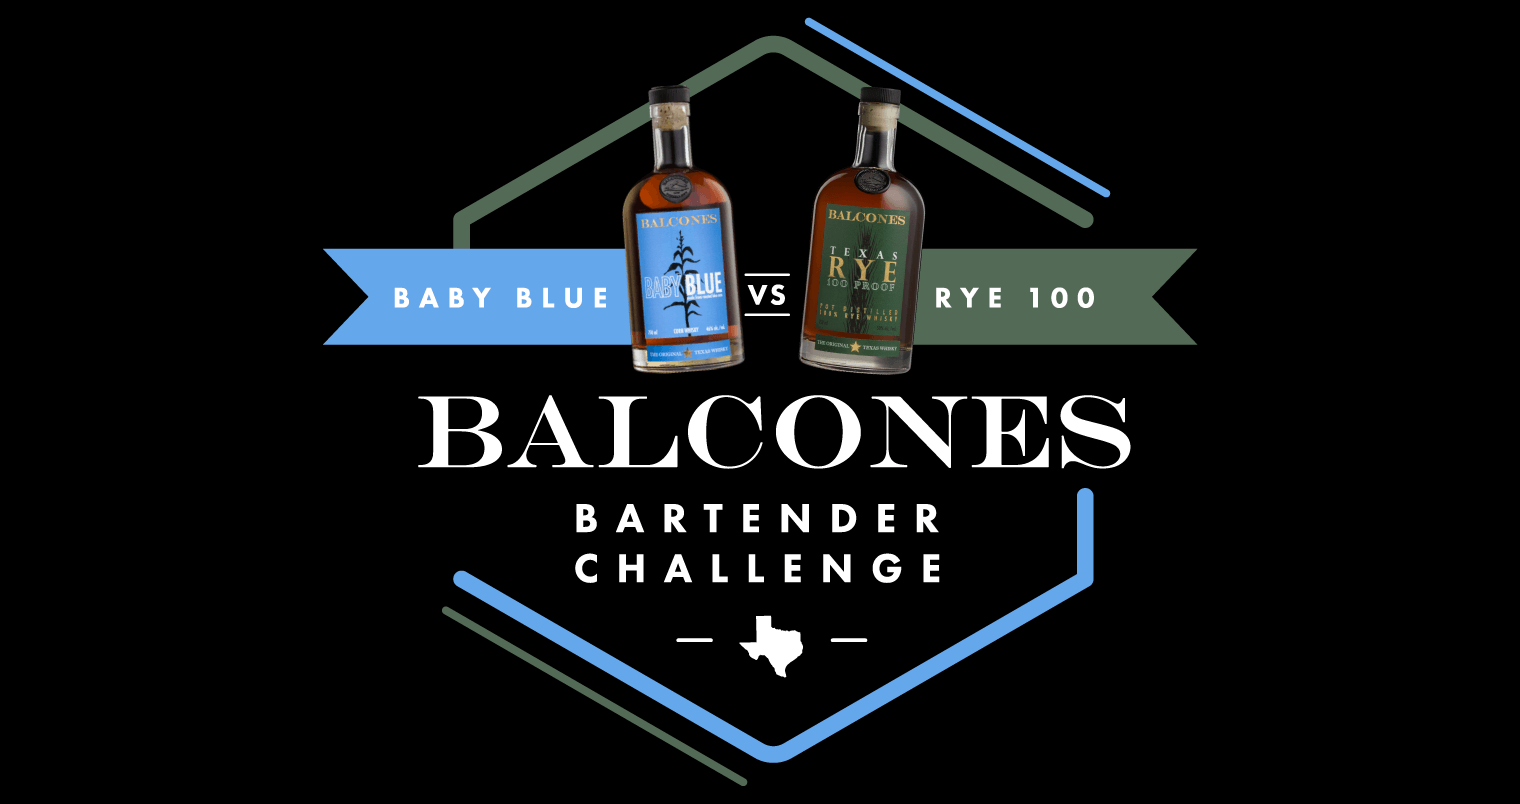 The Balcones Bartender Challenge, logo featured image